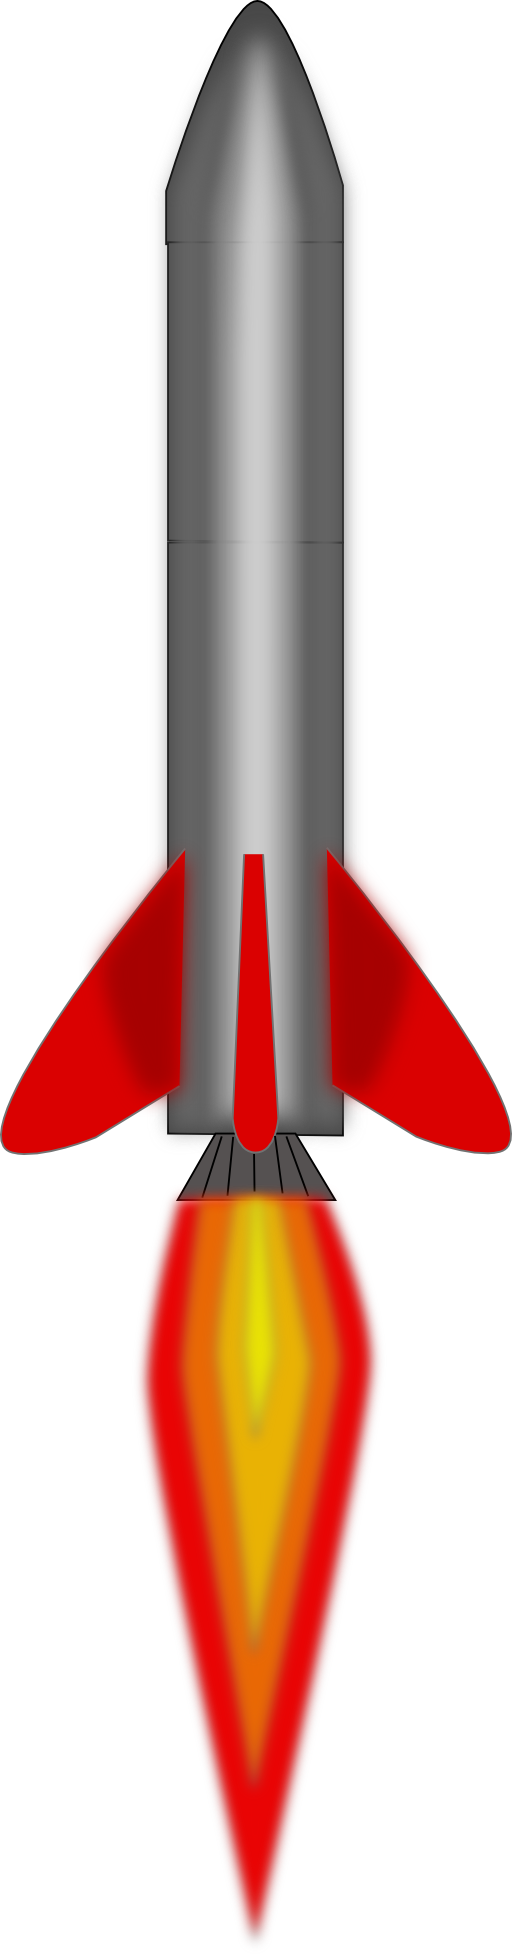 Rocket Images 2 Download Png Clipart